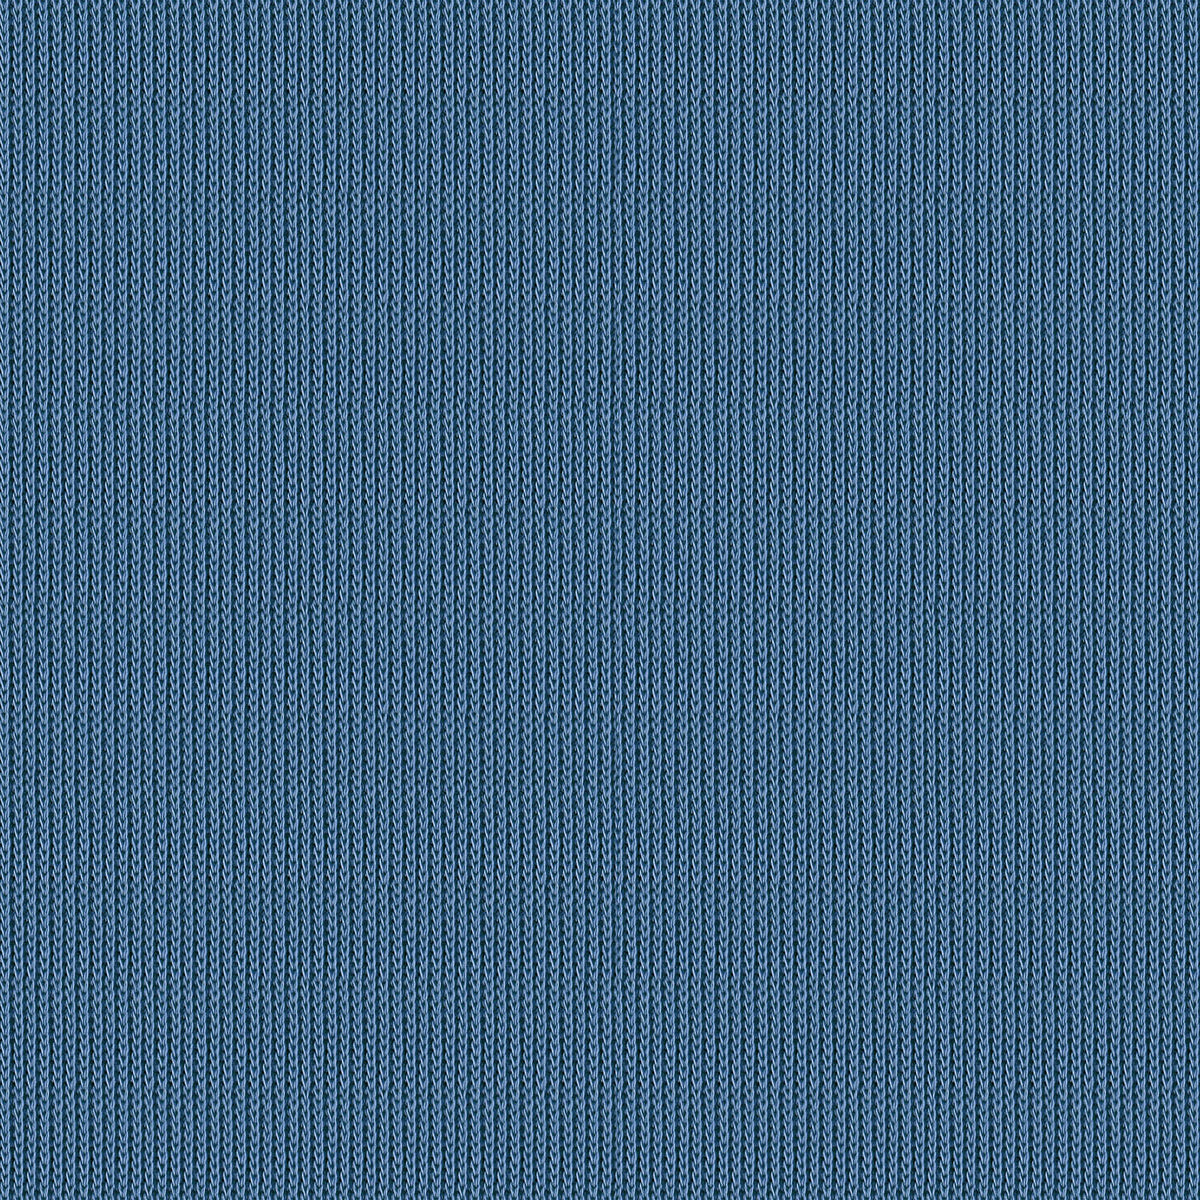 uaua closeup of azul fabric swatch